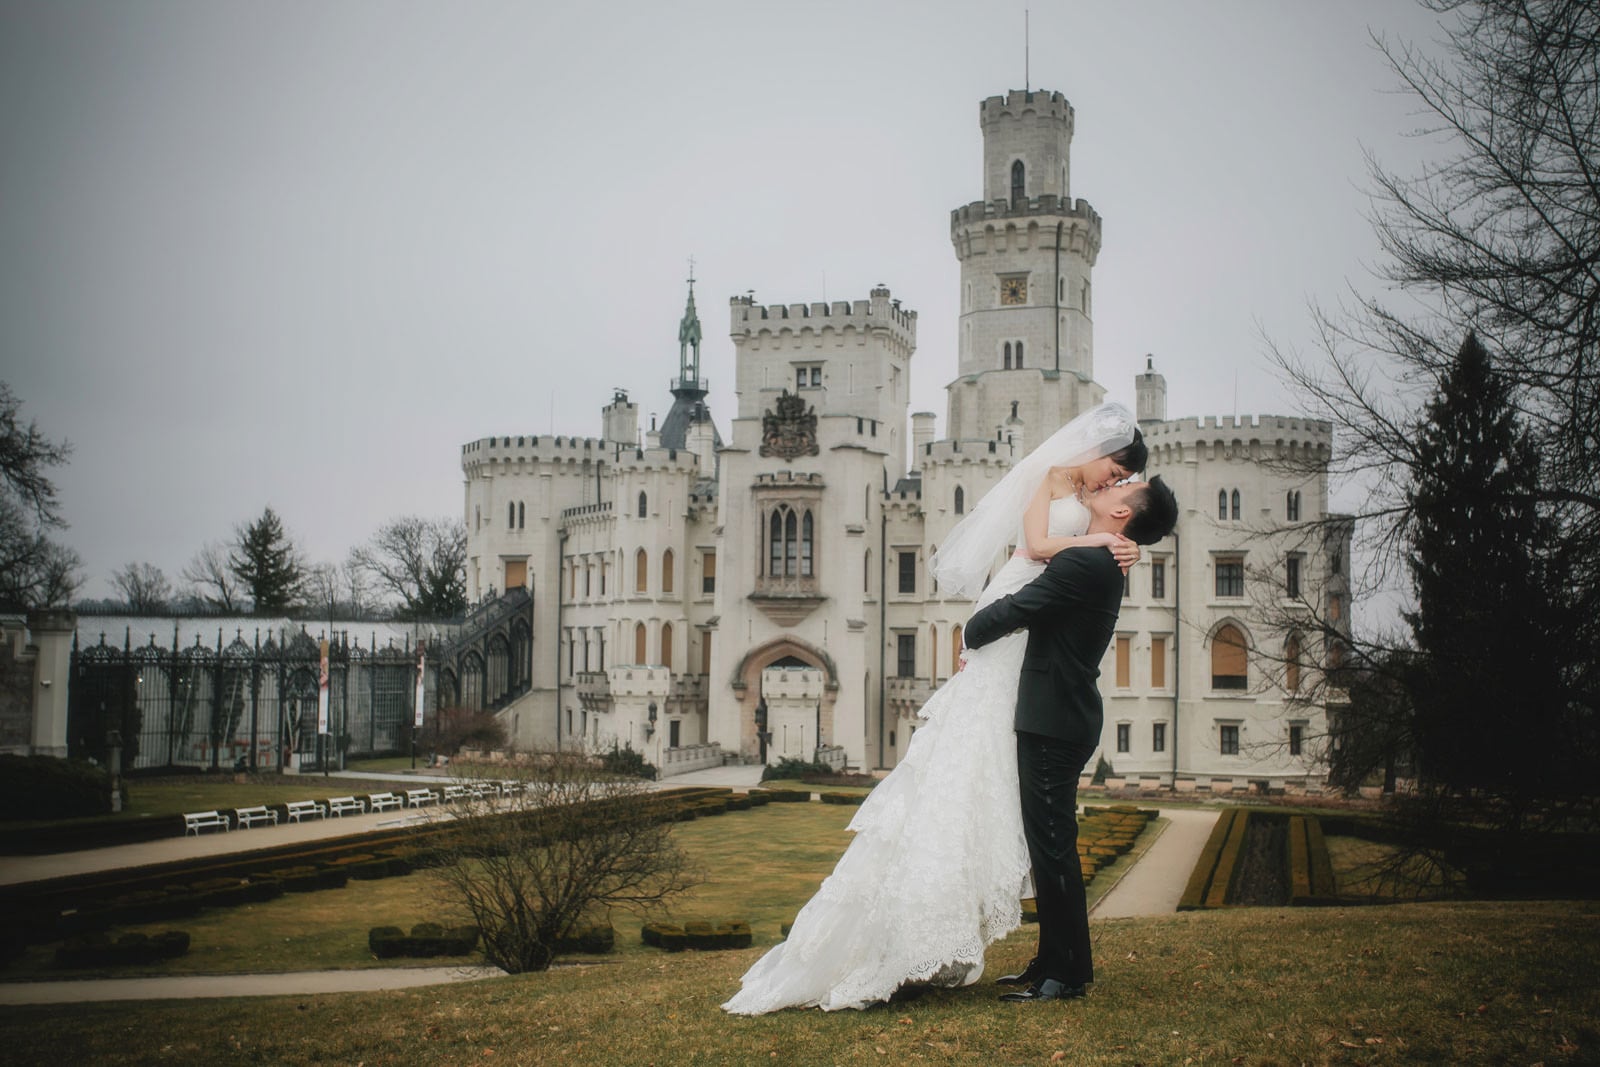 Castle Hluboka nad Vltavou wedding / Suki & Steven / wedding portrait session